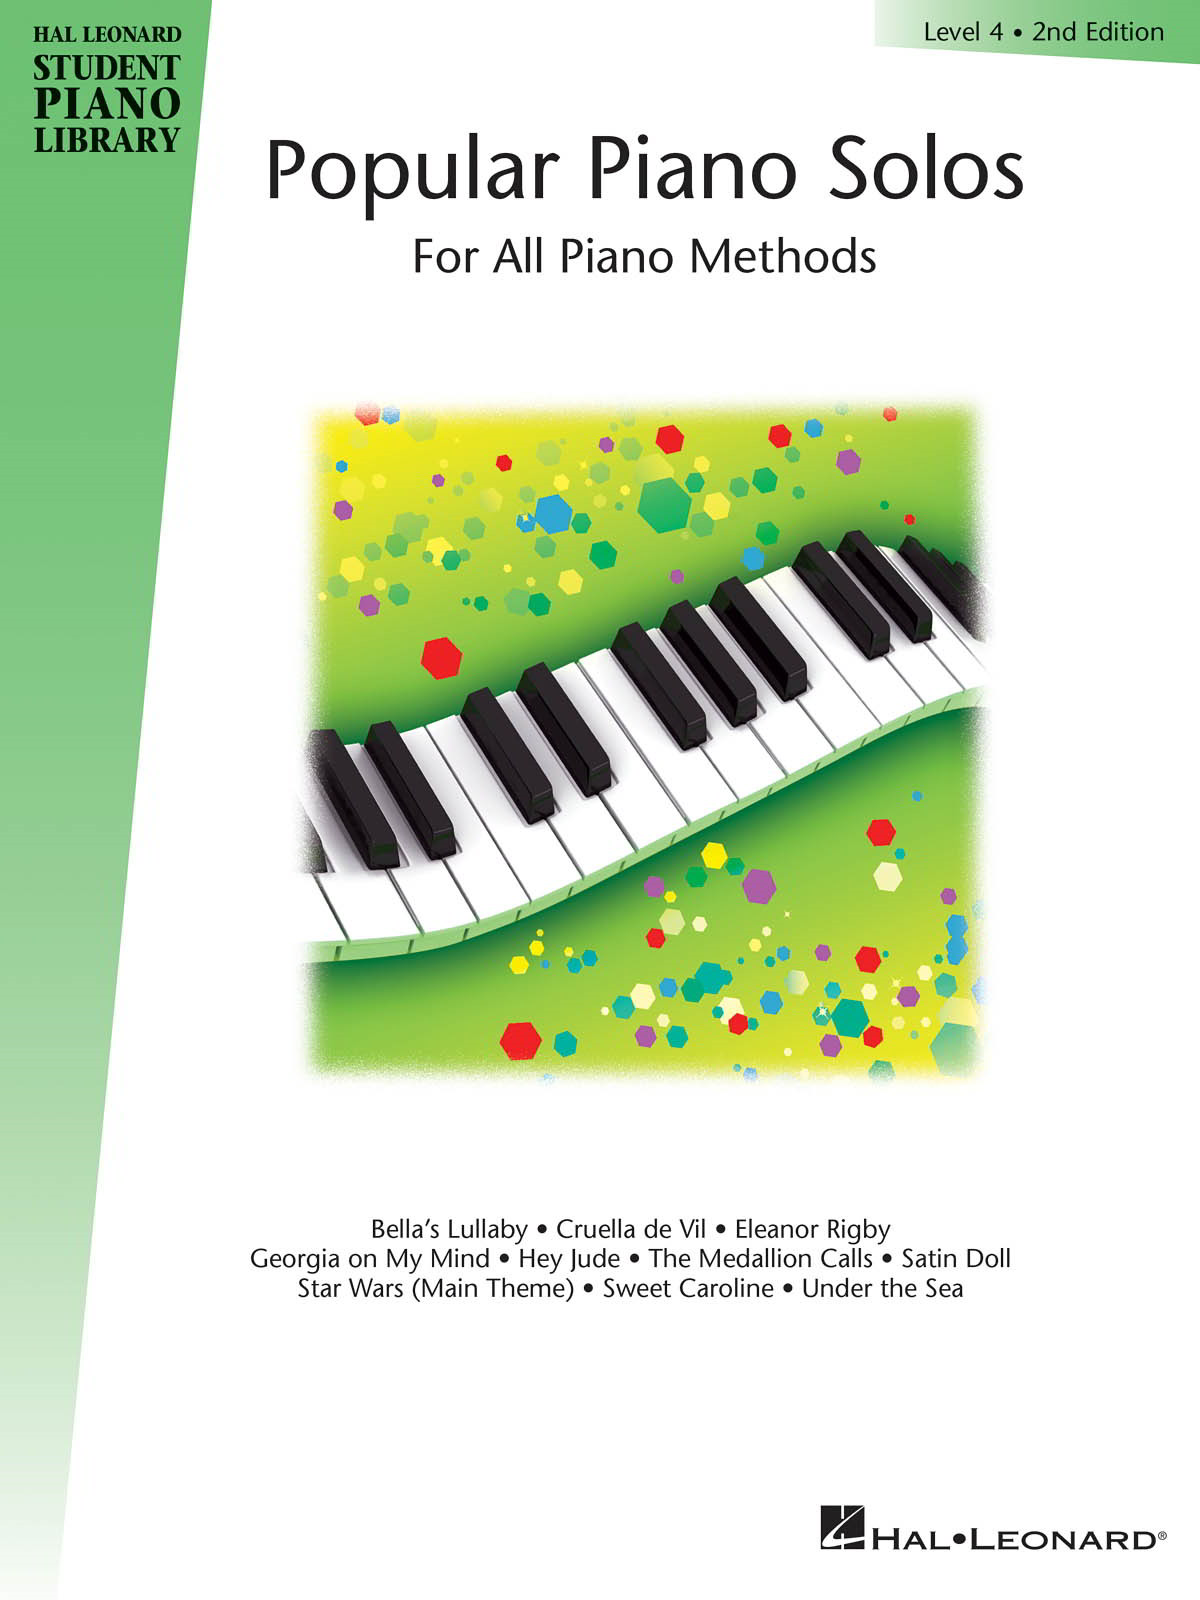 Hal Leonard Student Piano Library: Popular Piano Solos 4